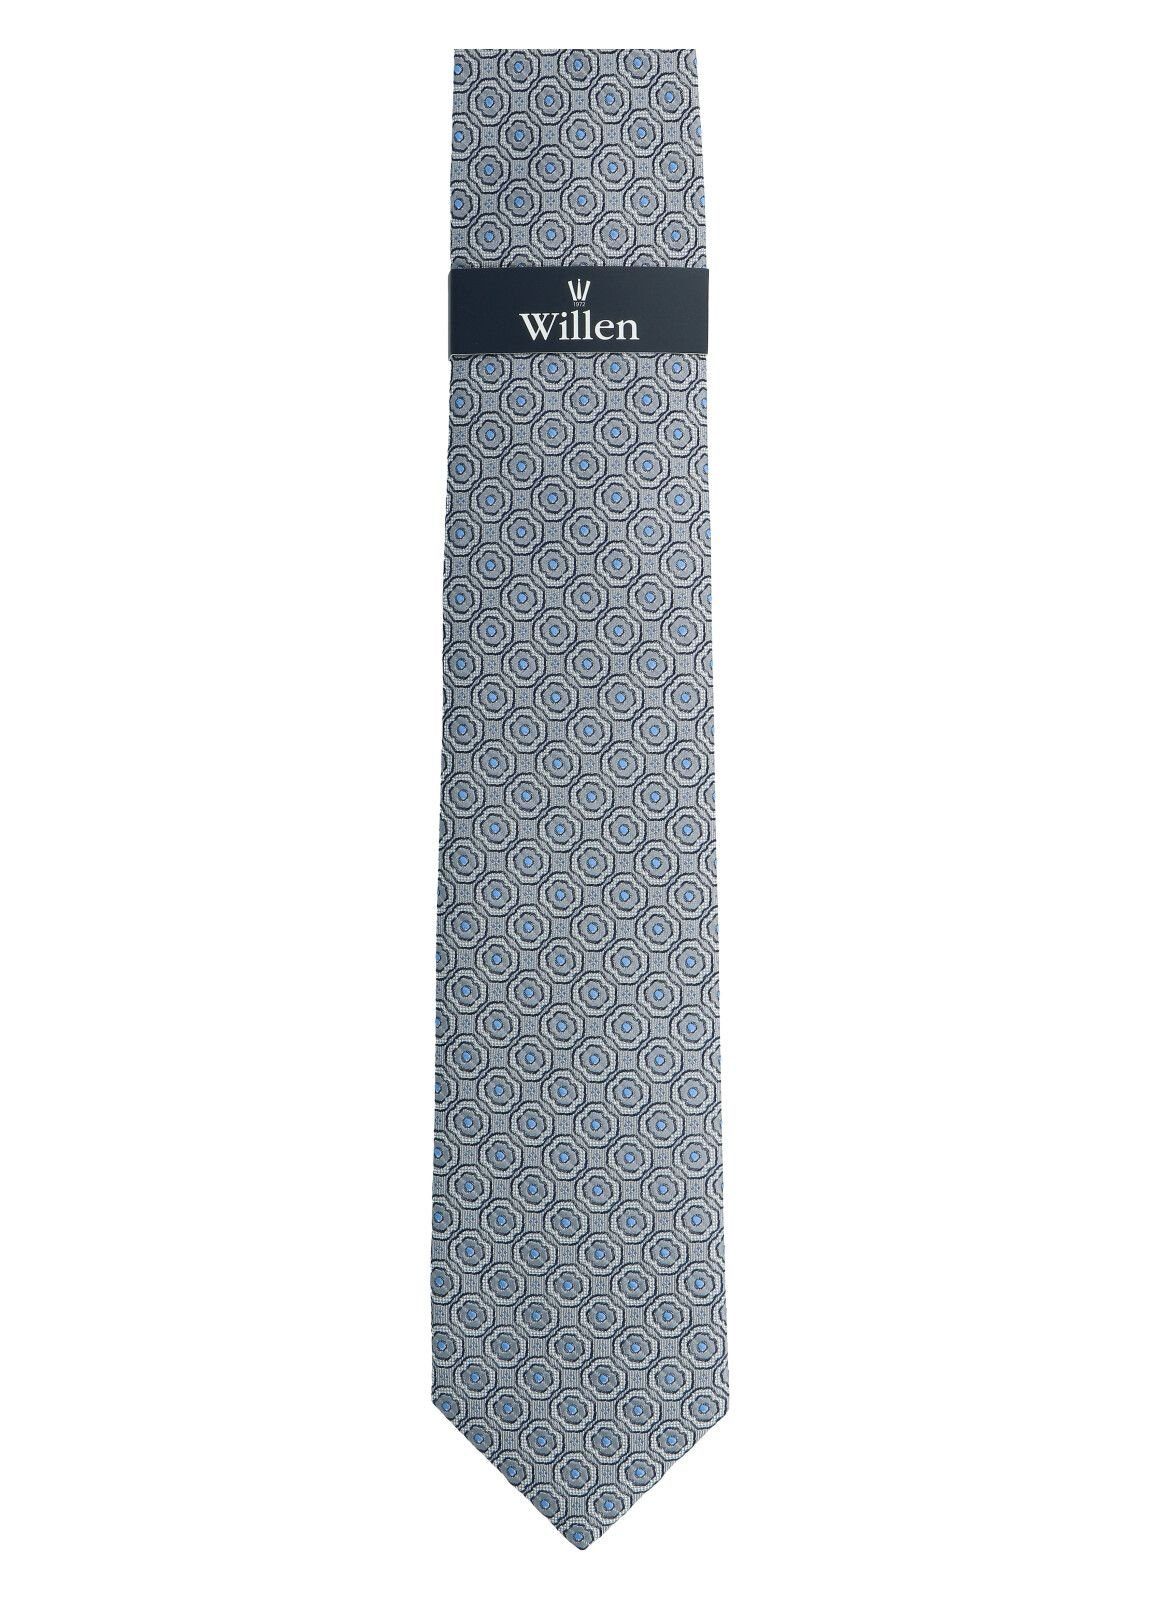 WILLEN silber Krawatte